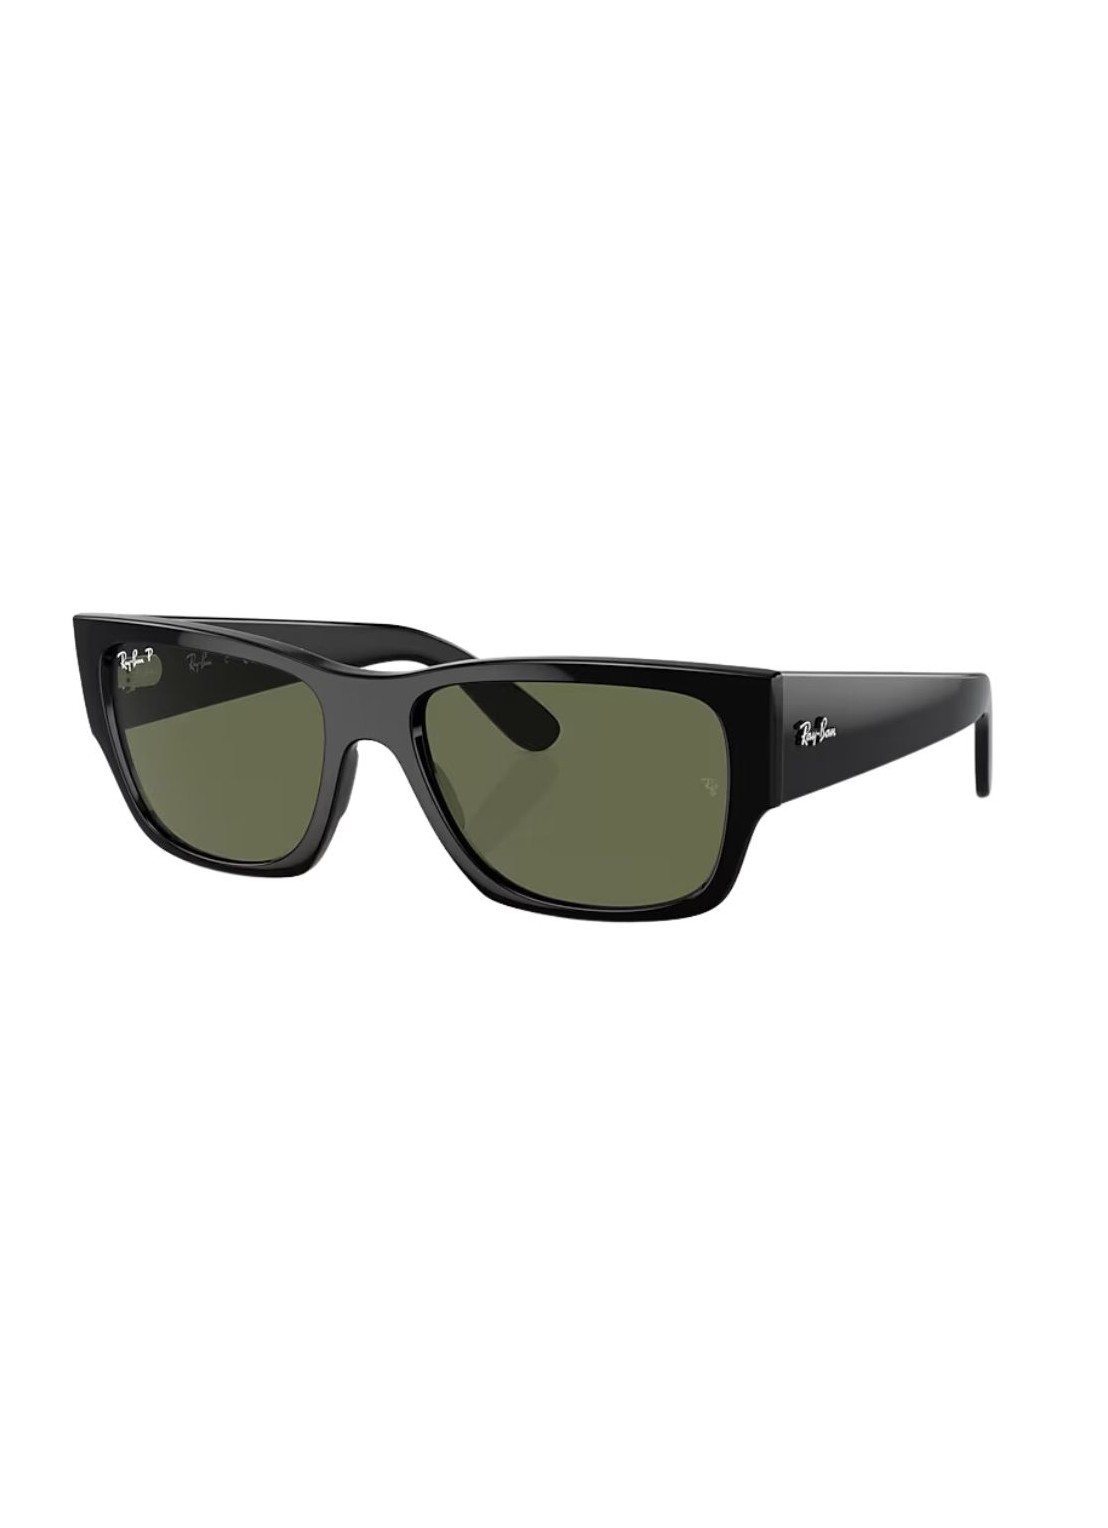 Gafas rayban sunglasses unisex0rb0947s - 0rb0947s 901/58 talla transparente
 